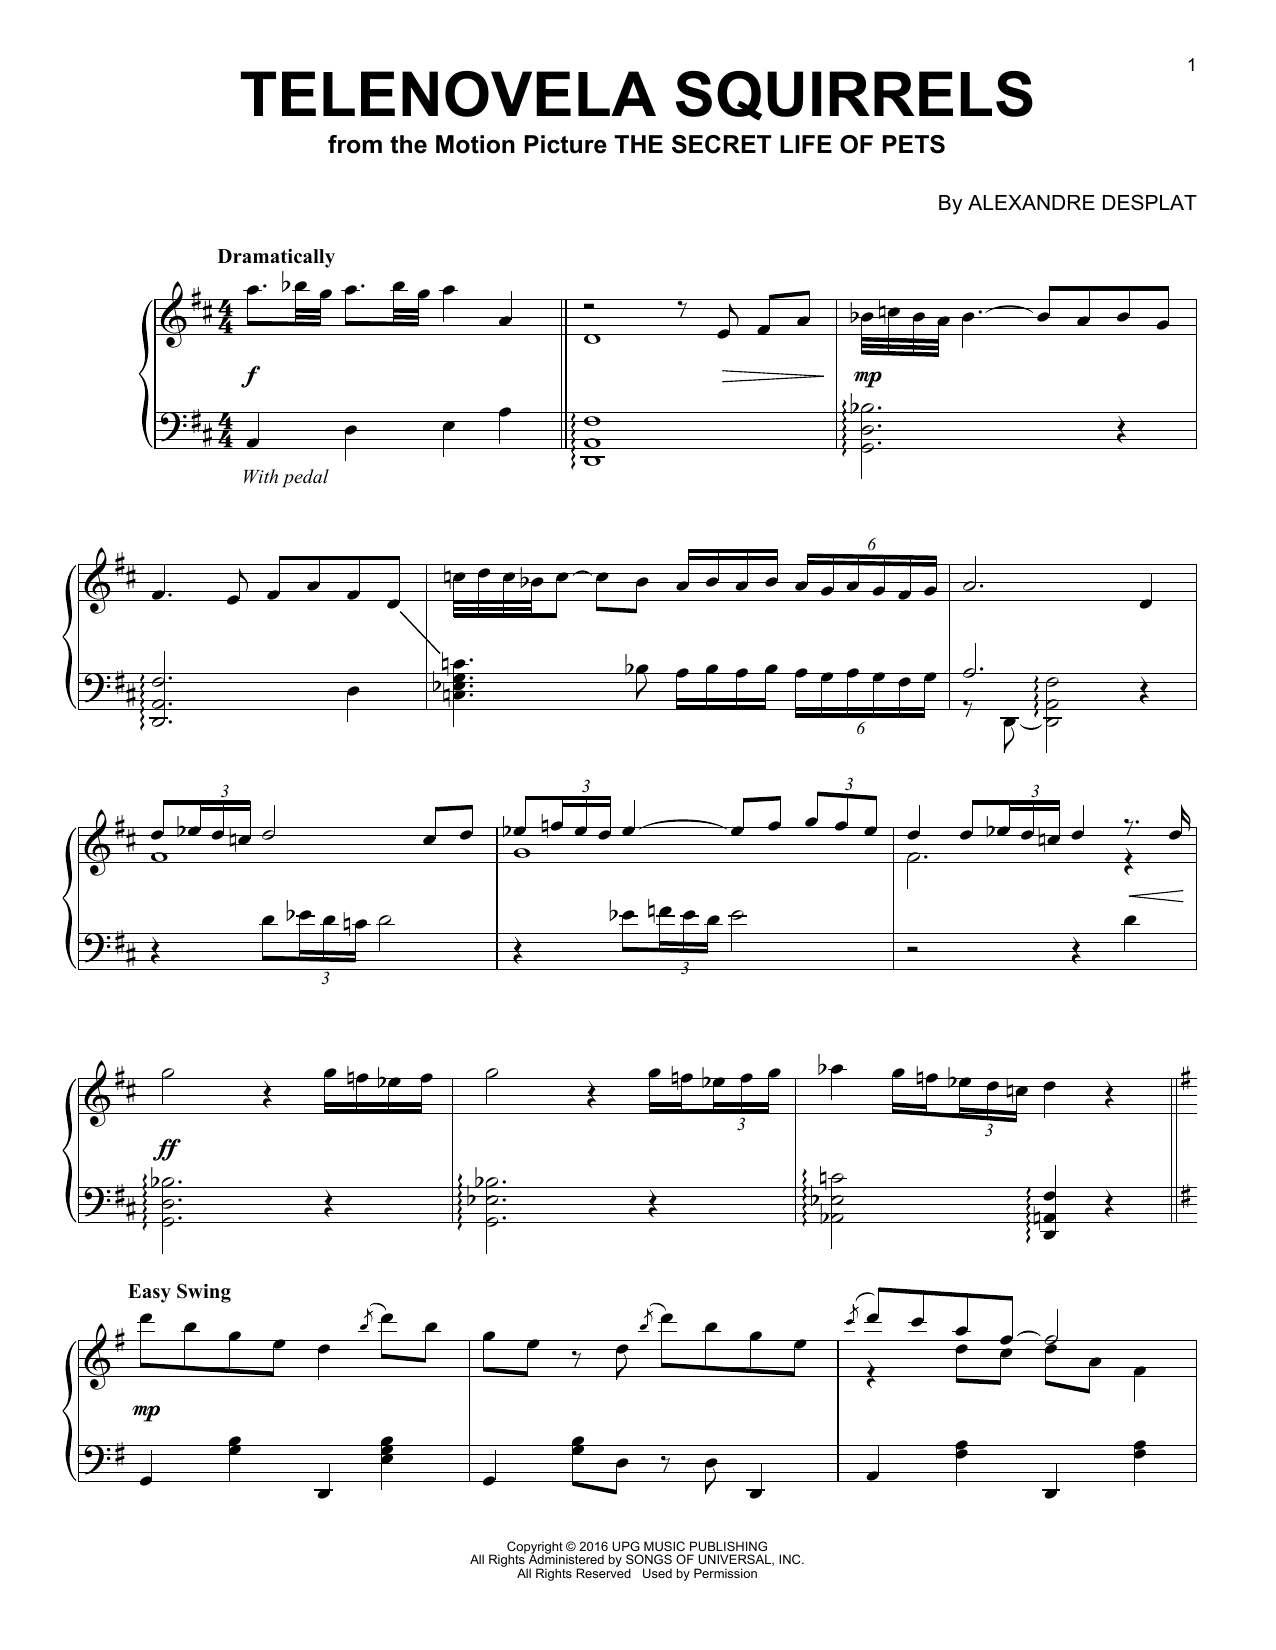 Alexandre Desplat Telenovela Squirrels Sheet Music Notes & Chords for Piano - Download or Print PDF